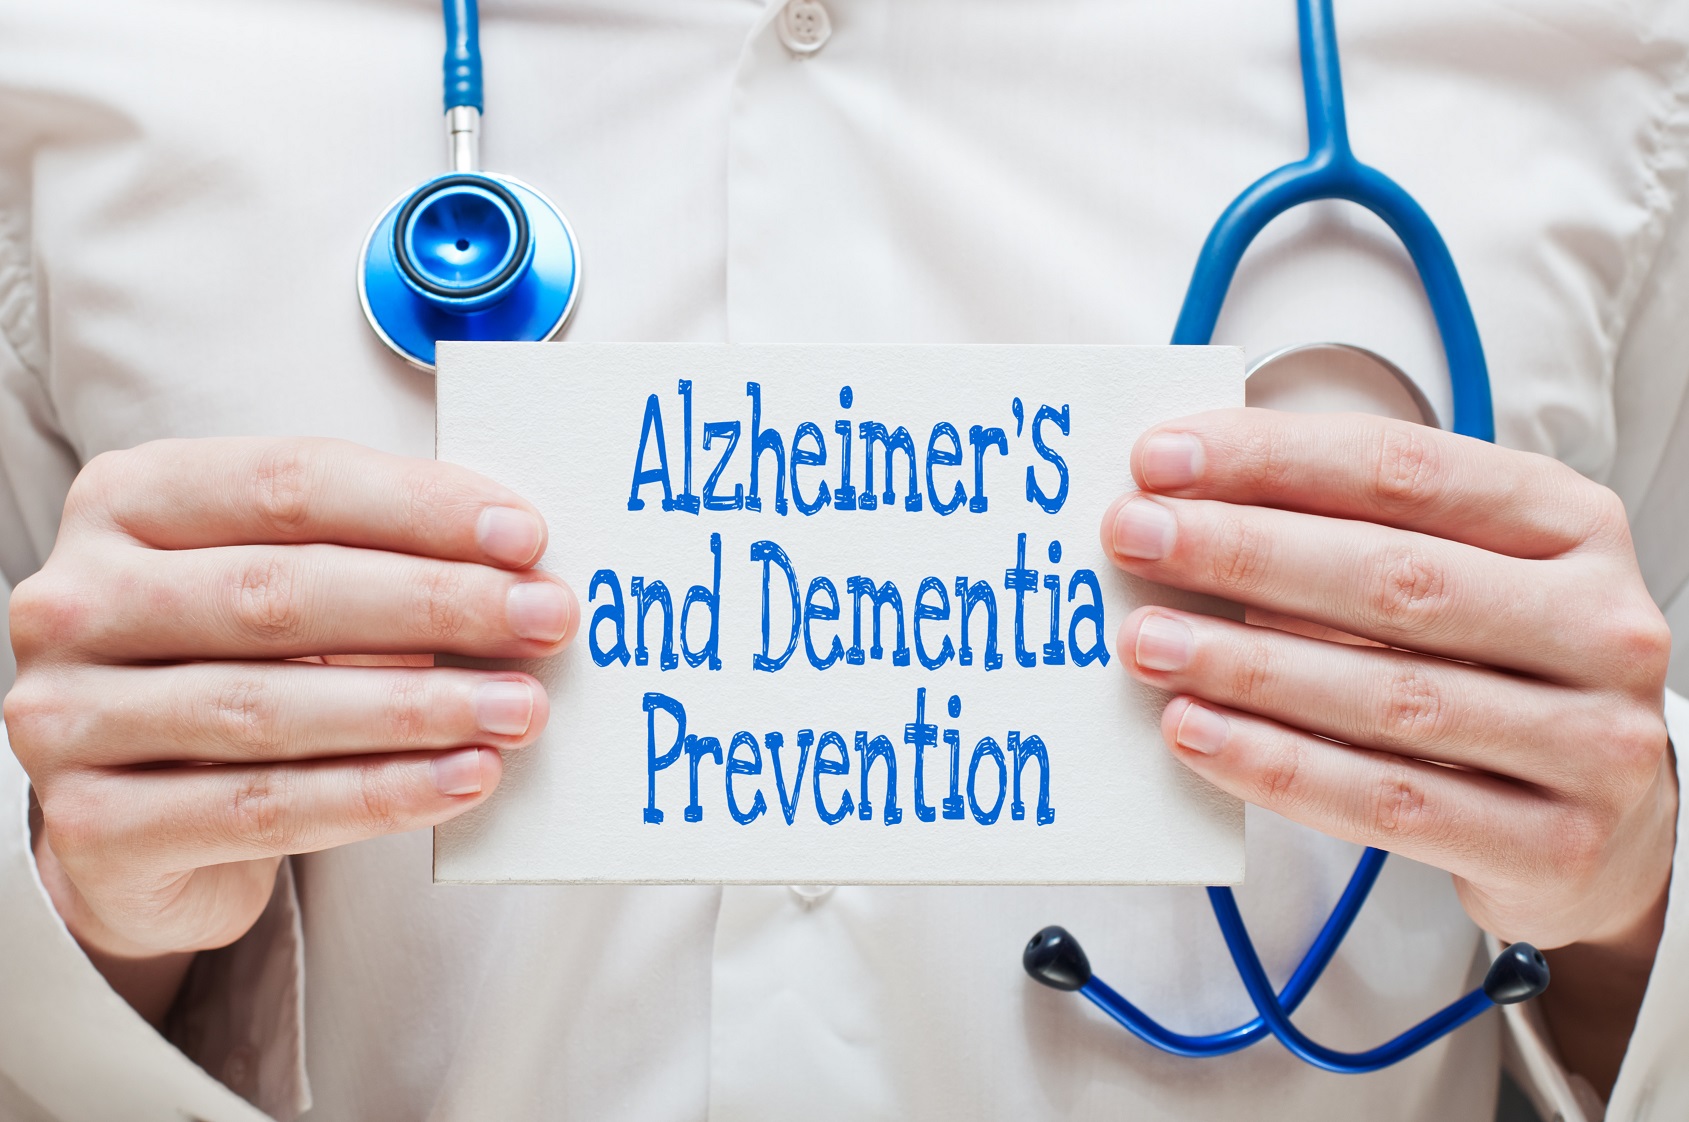 Alzheimer's prevention, Alzheimer's symptoms. Dementia symptoms, dementia prevention